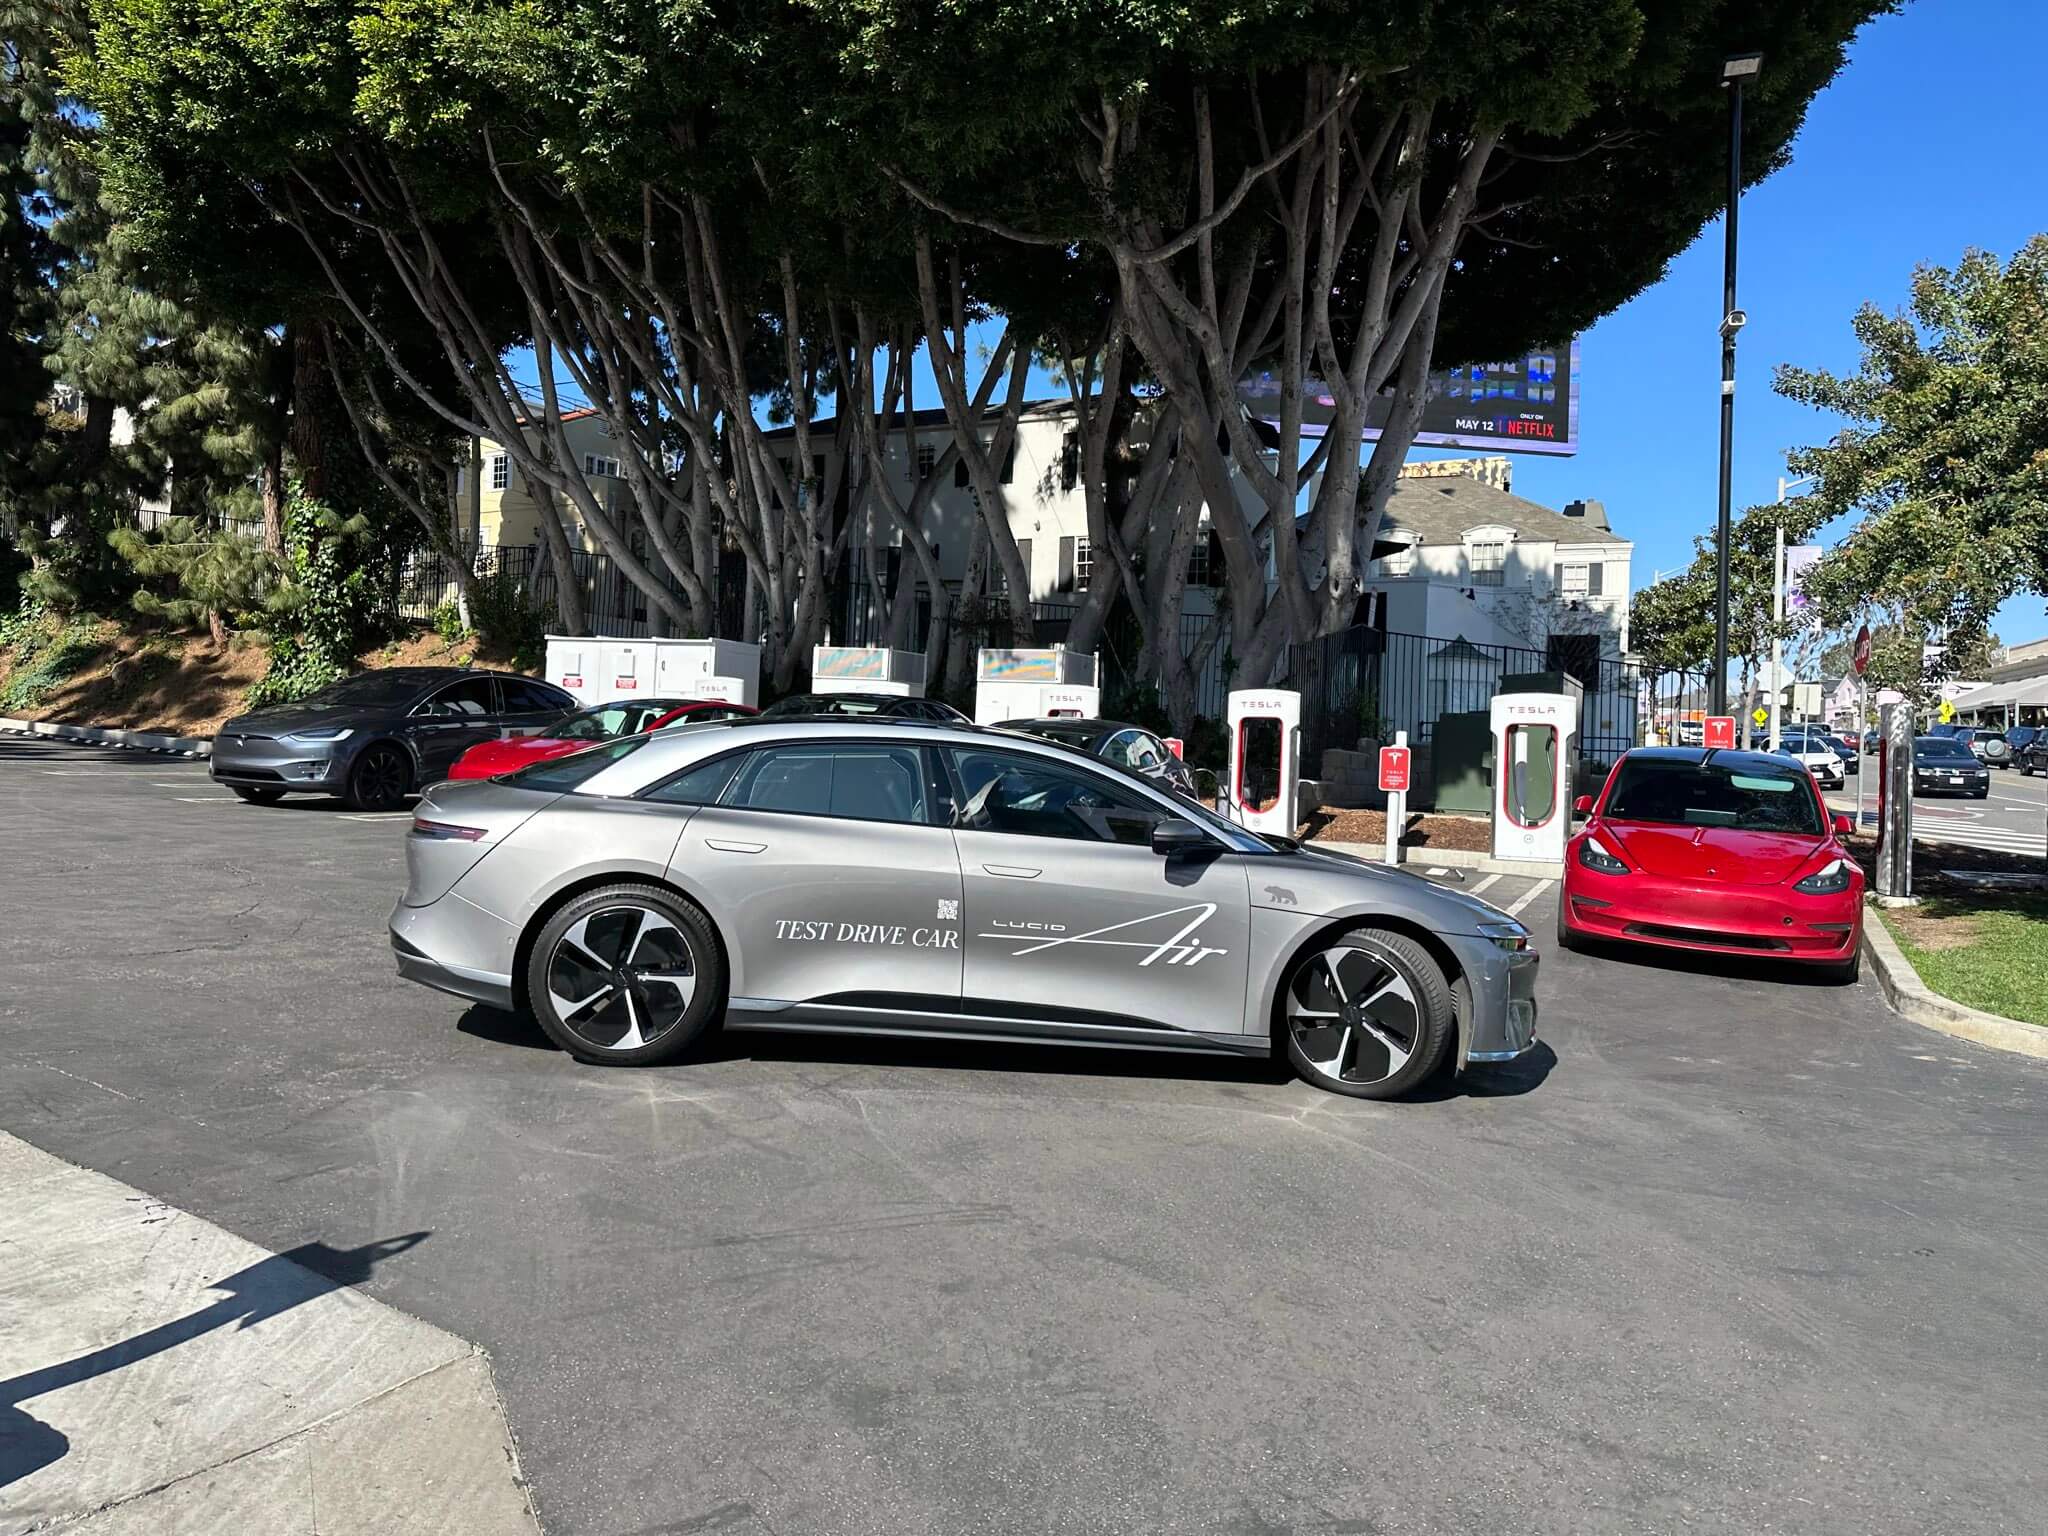 Tesla Supercharger ’testrit stroperij’ wordt steeds populairder